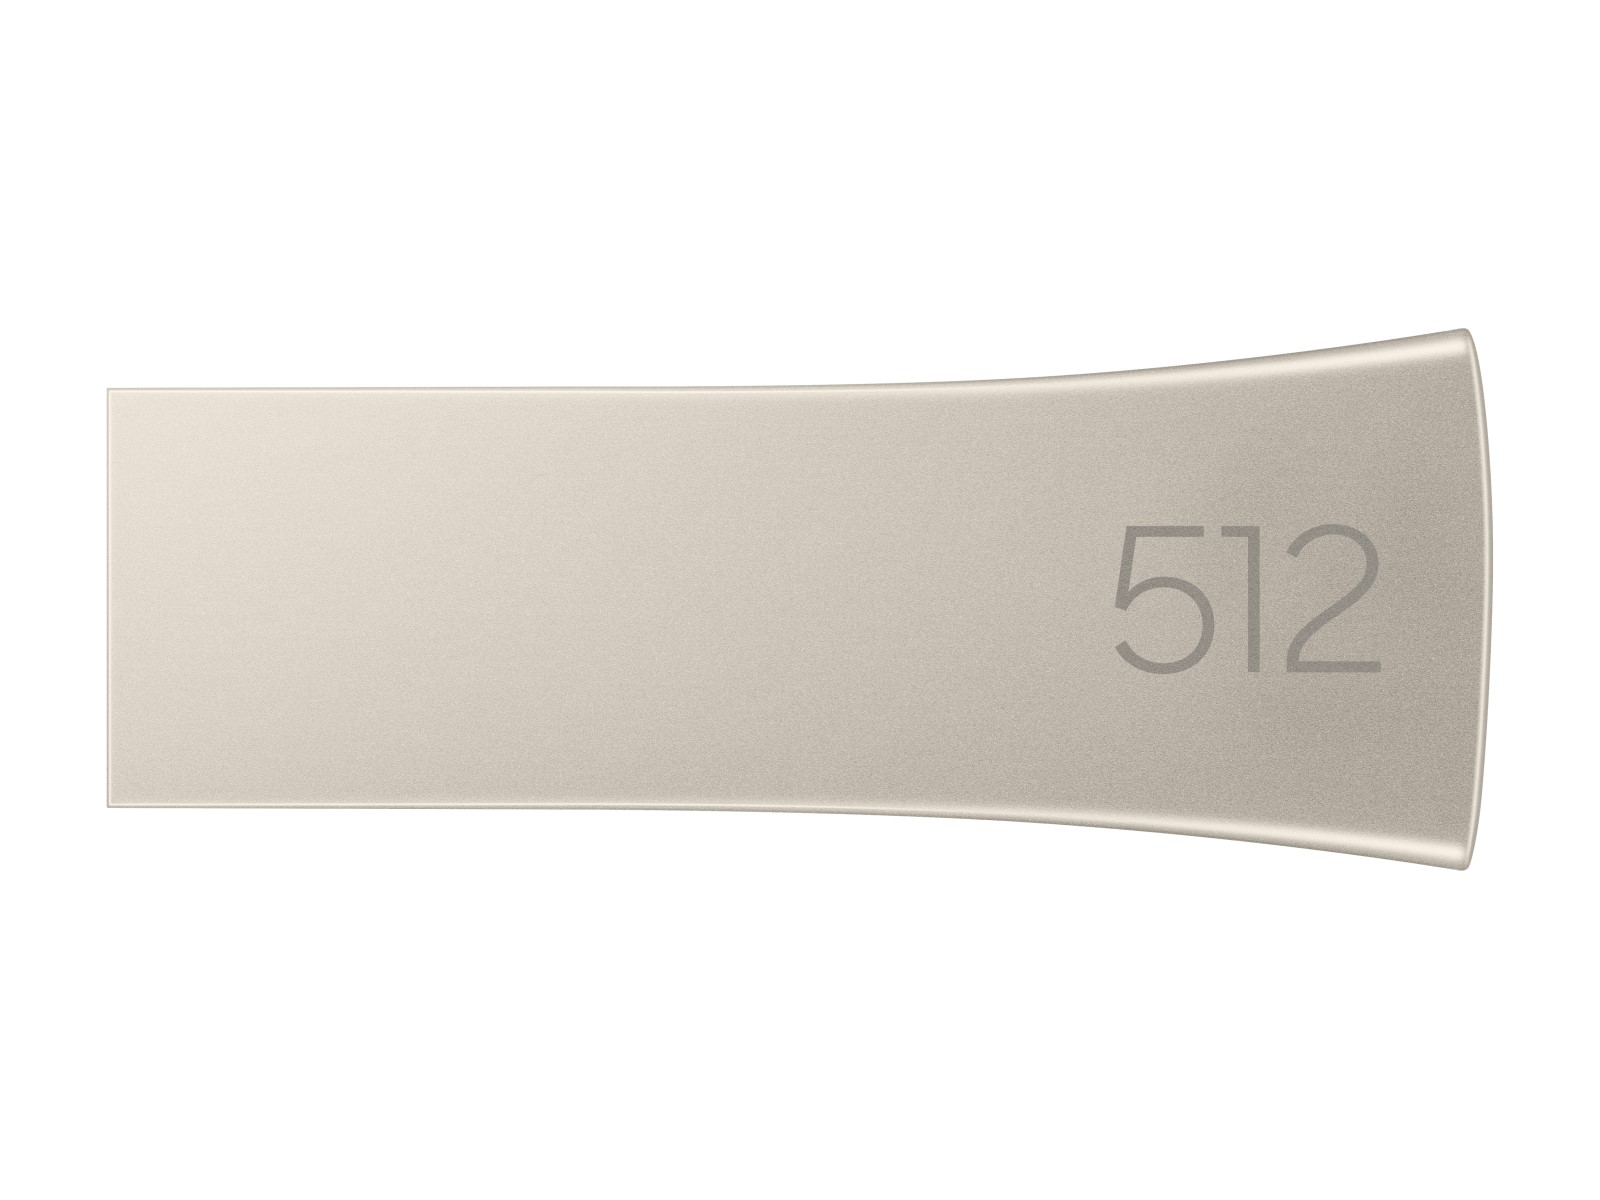 Thumbnail image of BAR Plus USB 3.2 Flash Drive 512GB Champagne Silver